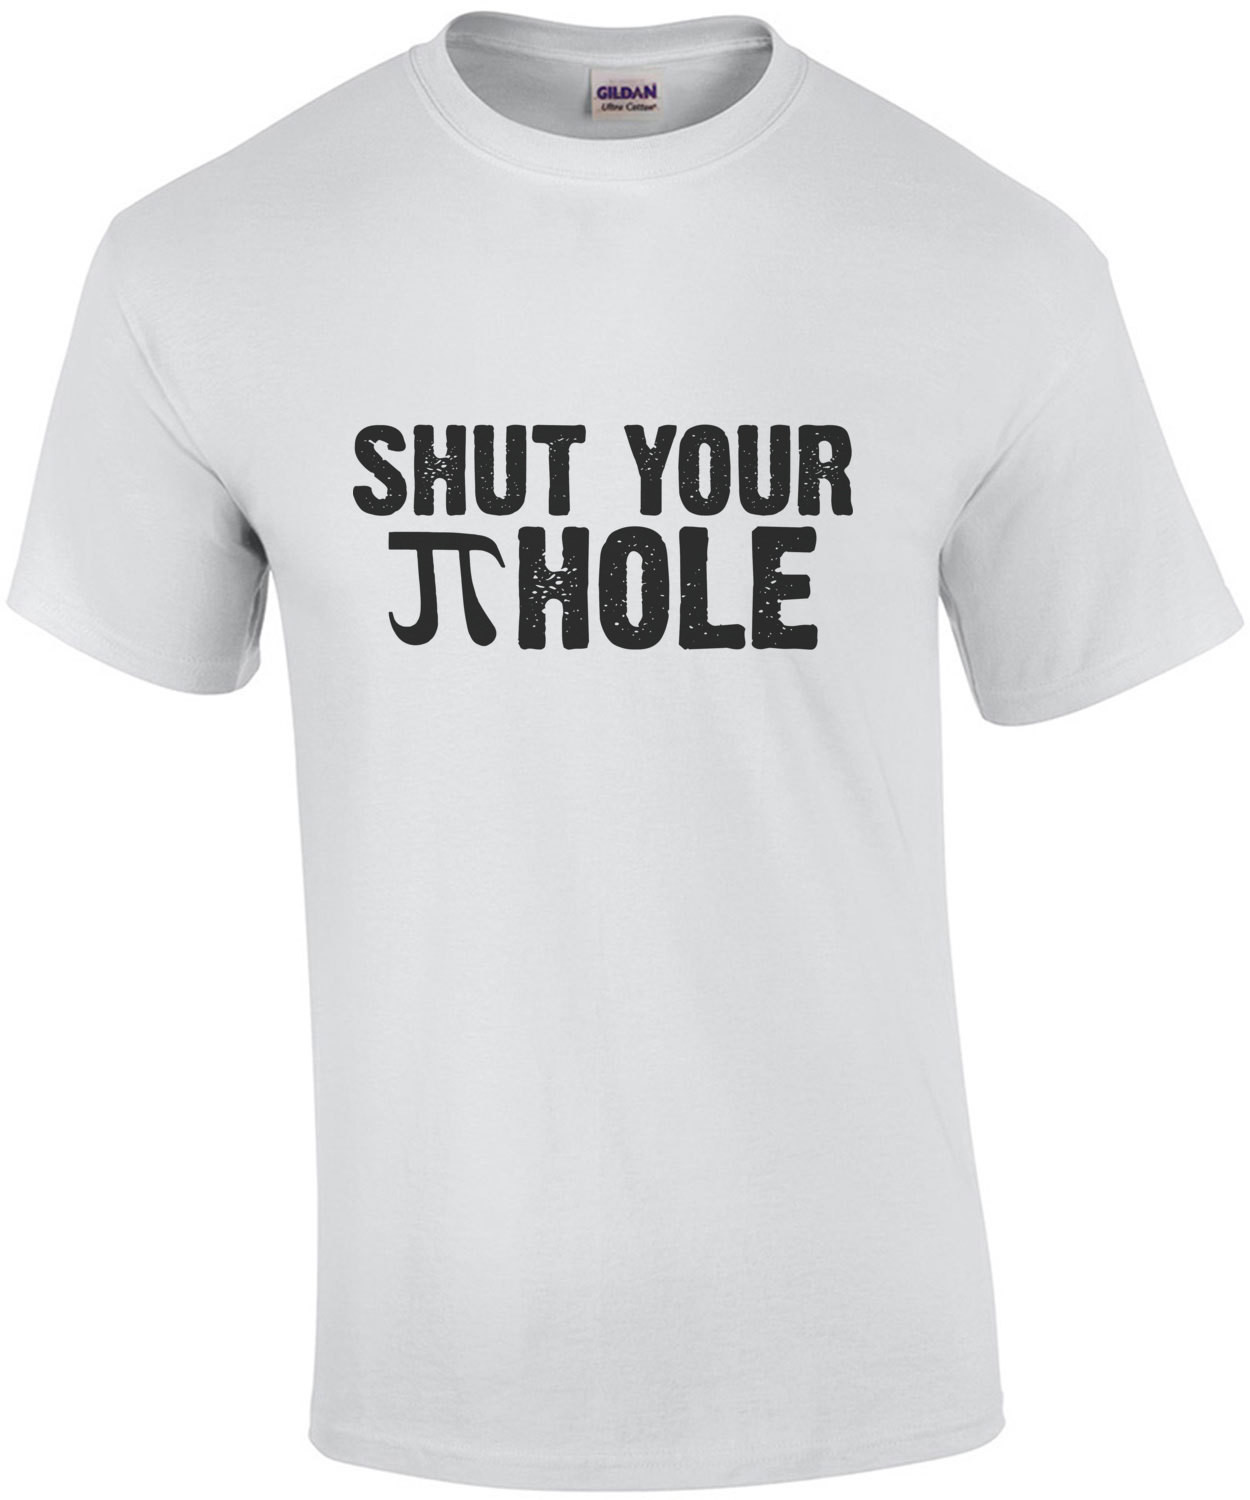 Shut your pi hole - funny pun t-shirt